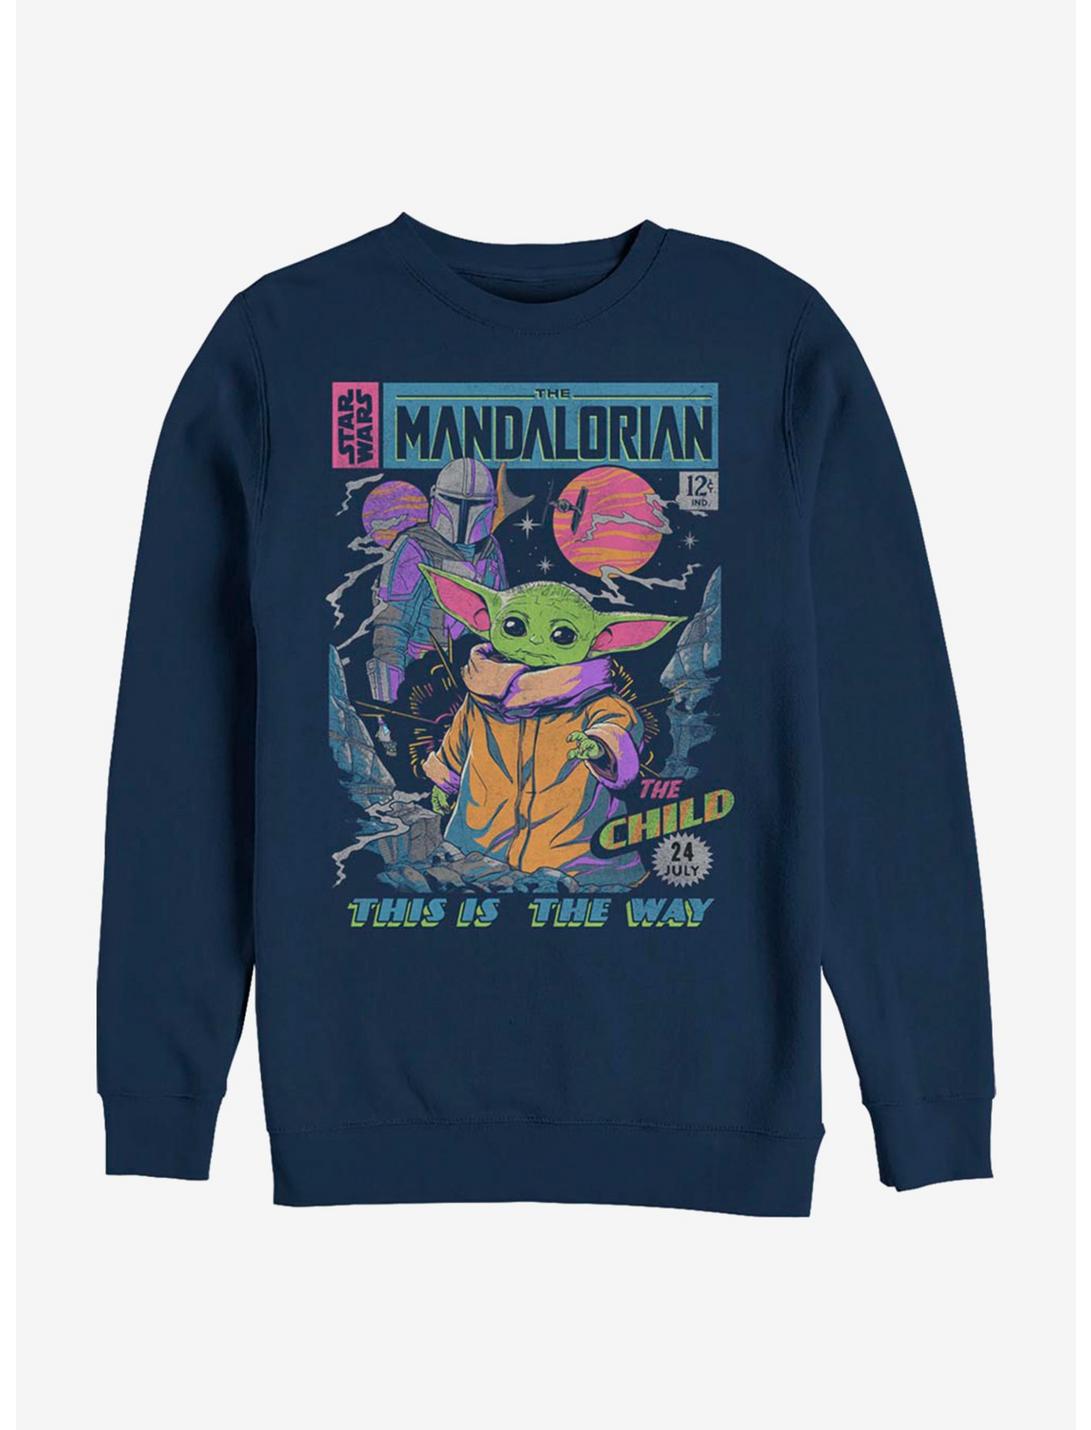 Star Wars The Mandalorian Neon Poster Sweatshirt, NAVY, hi-res